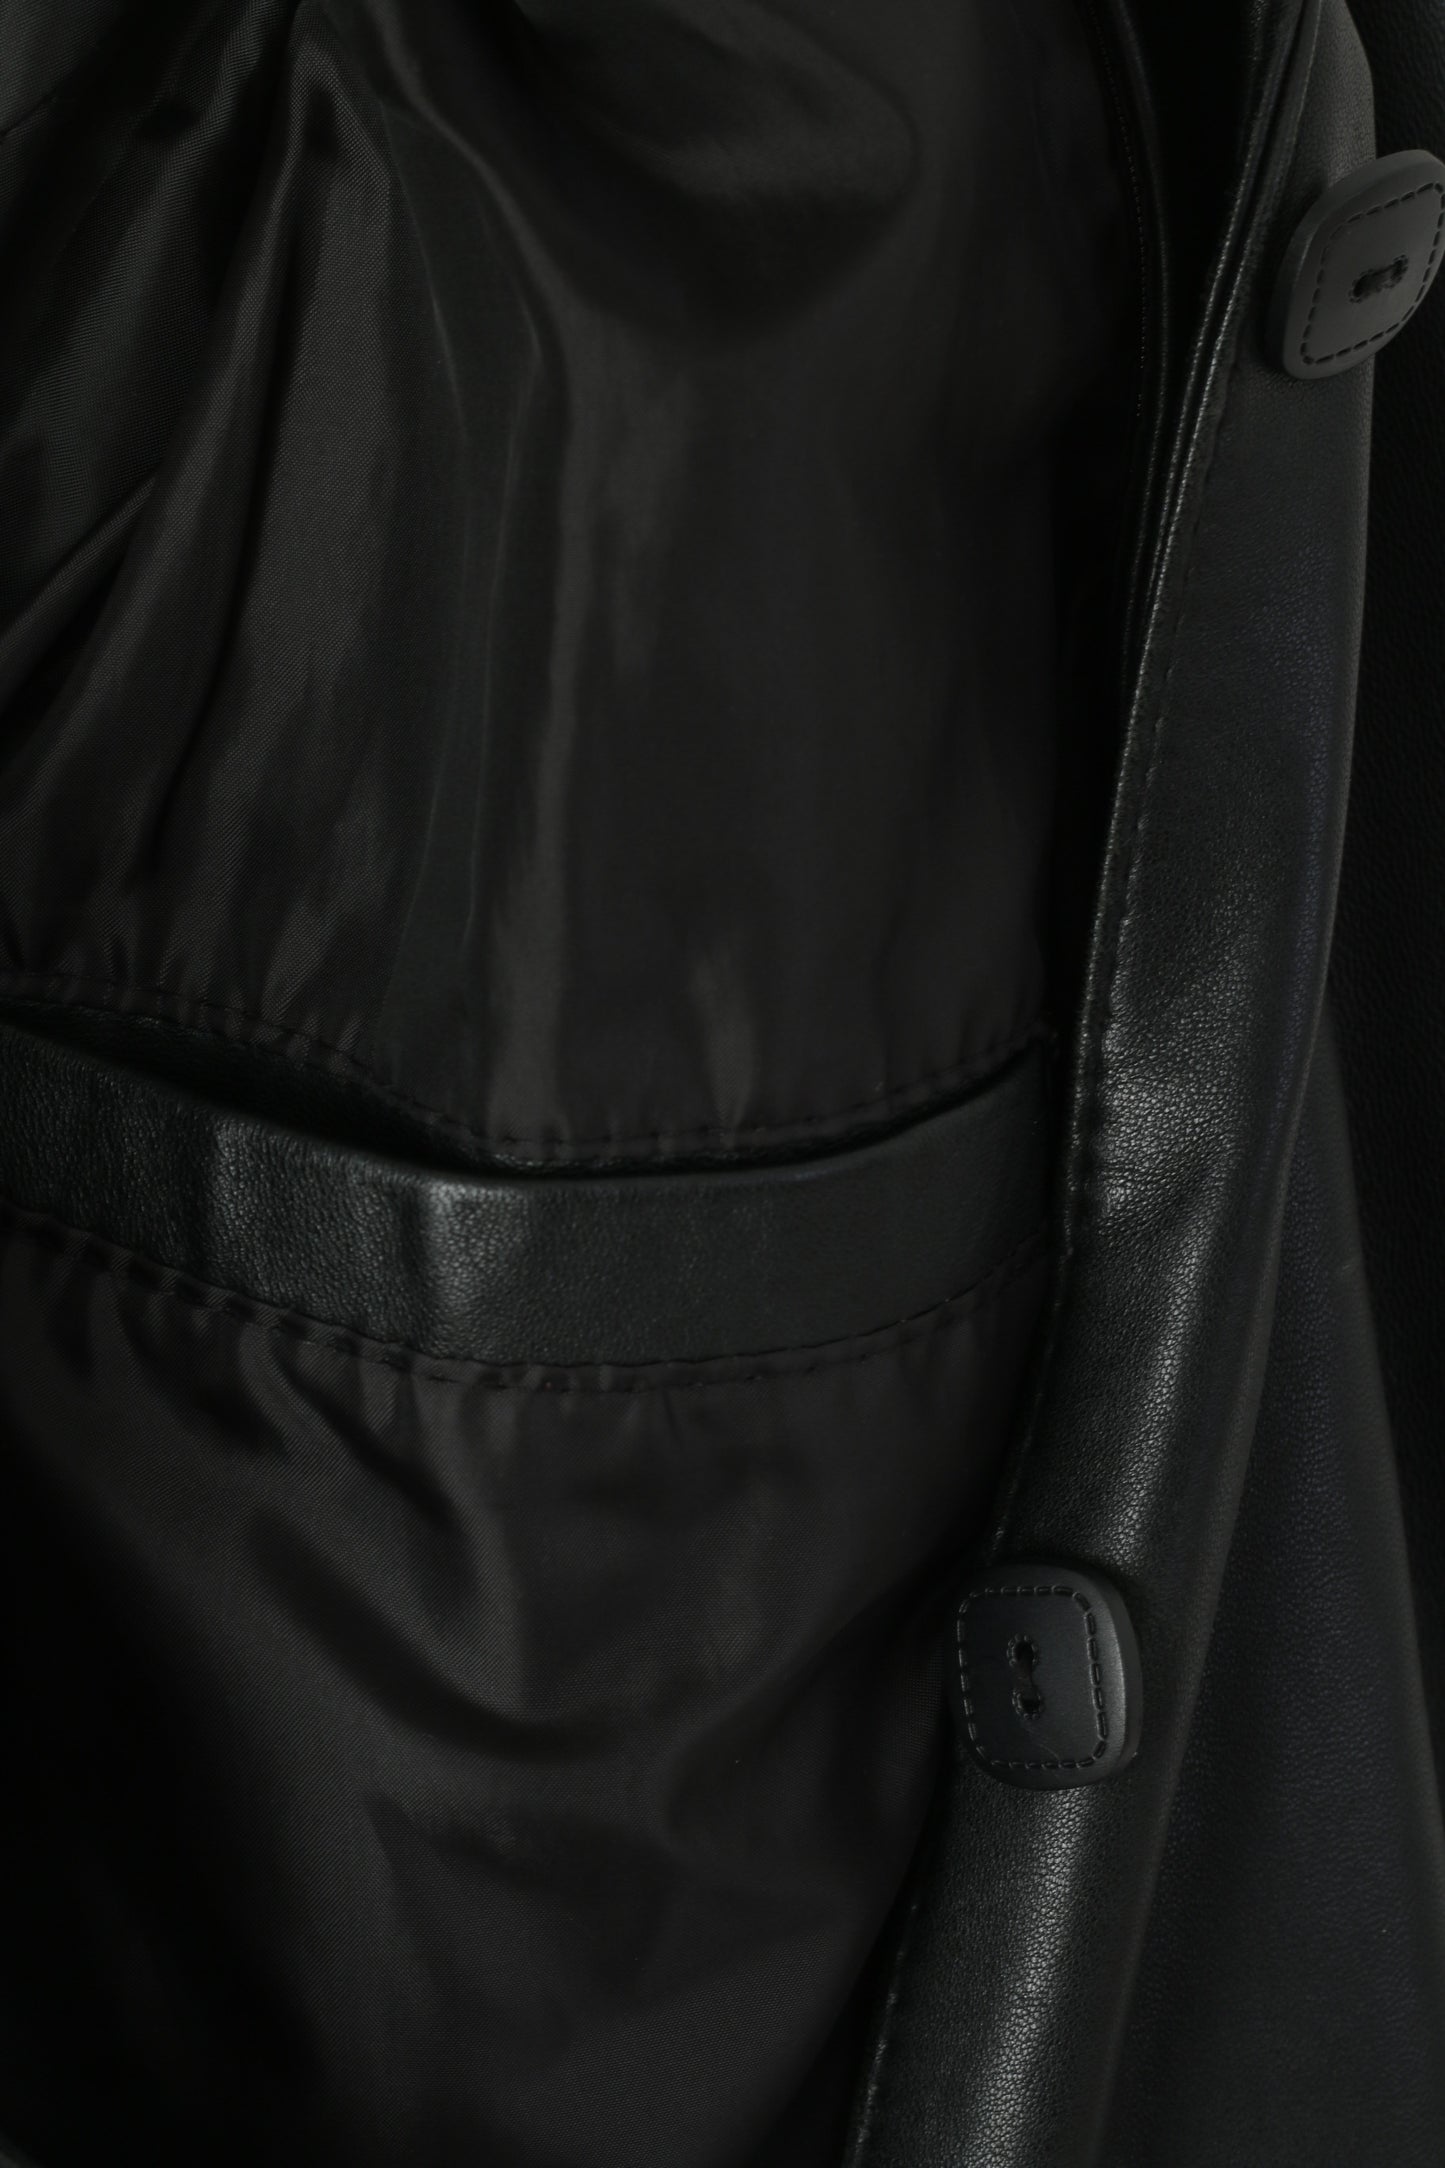 Vintage Women L Jacket Black Leather Soft Skin Single Breasted Classic Coat